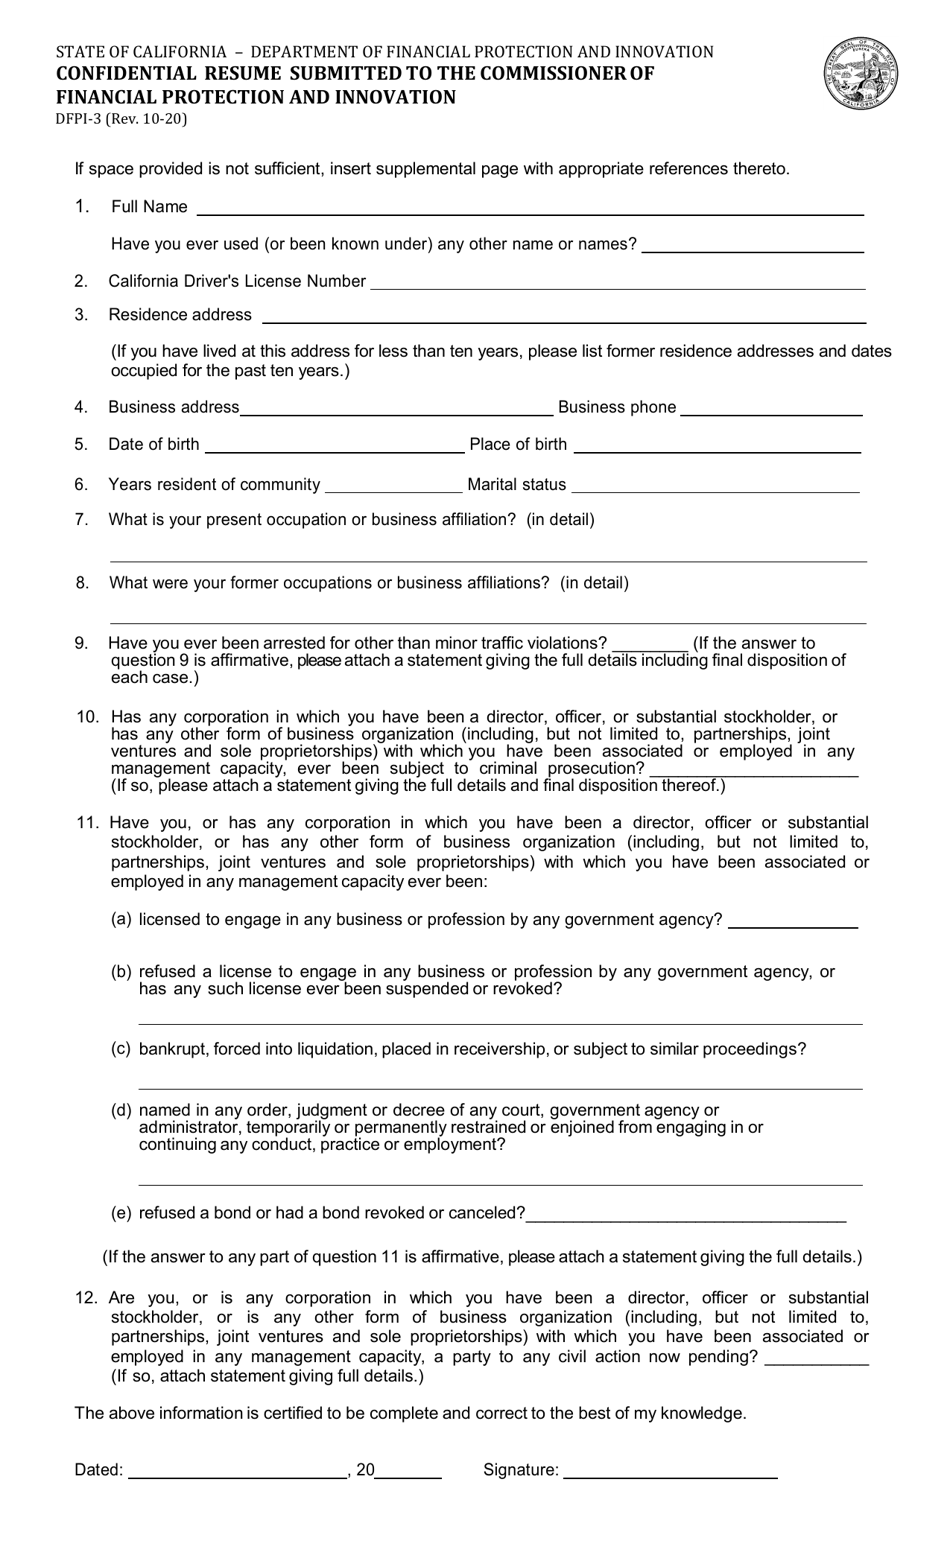 Form DFPI-3 Confidential Resume - California, Page 1